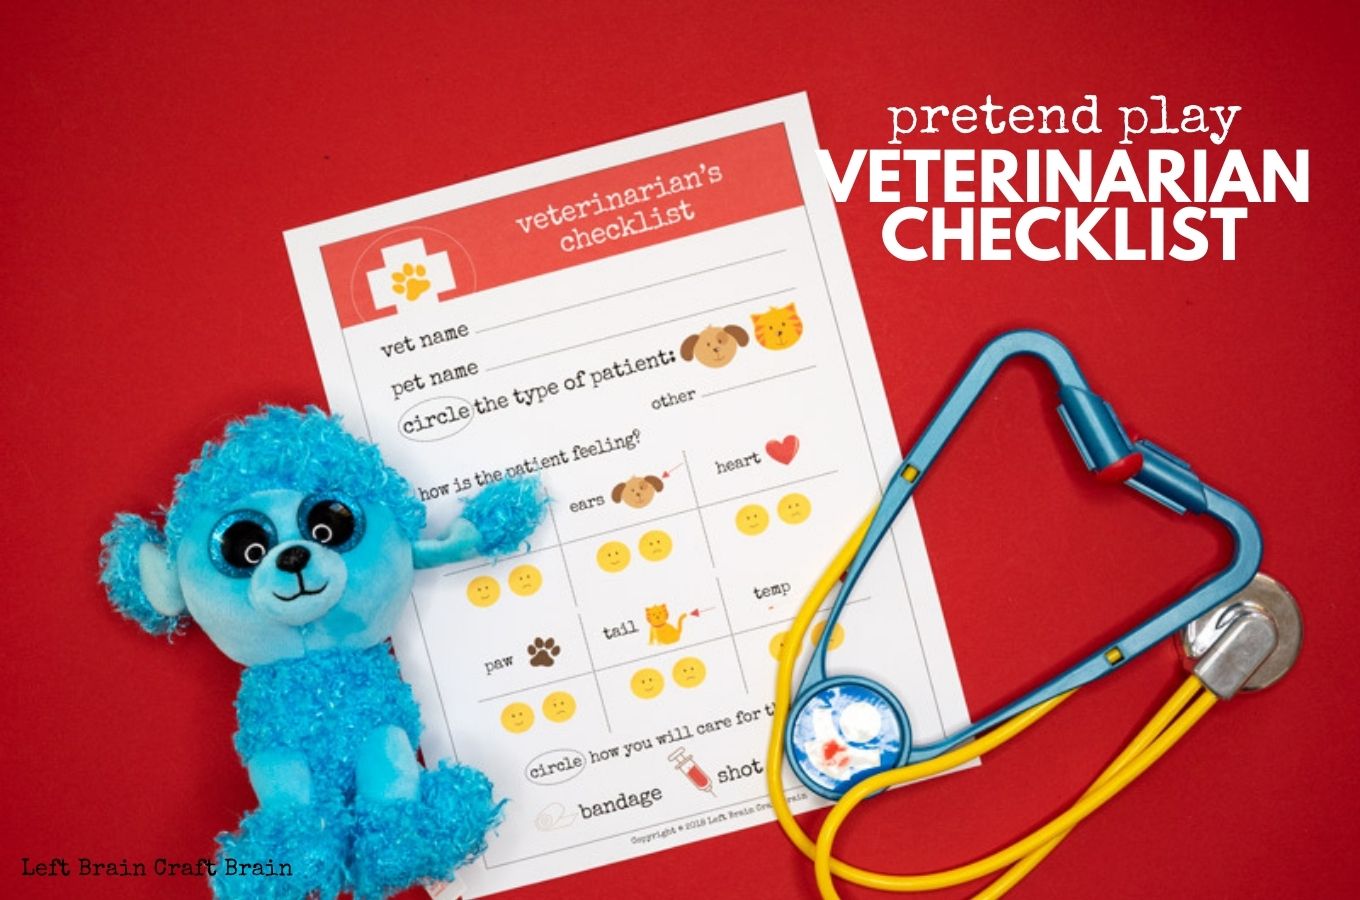 pretend play veterinarian checklist 1360x900